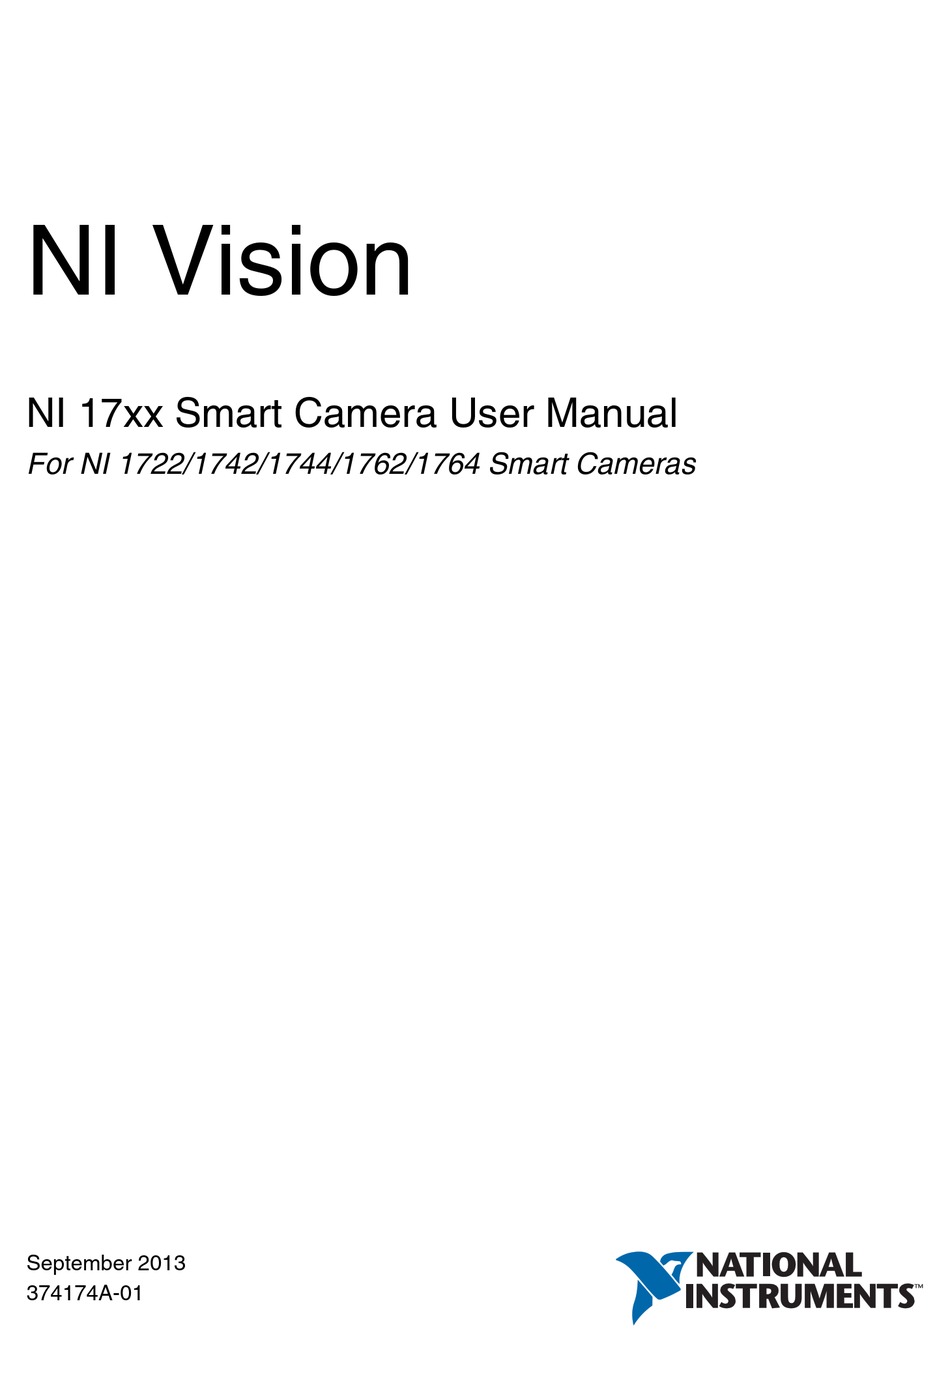 NATIONAL INSTRUMENTS NI VISION 1722 USER MANUAL Pdf Download